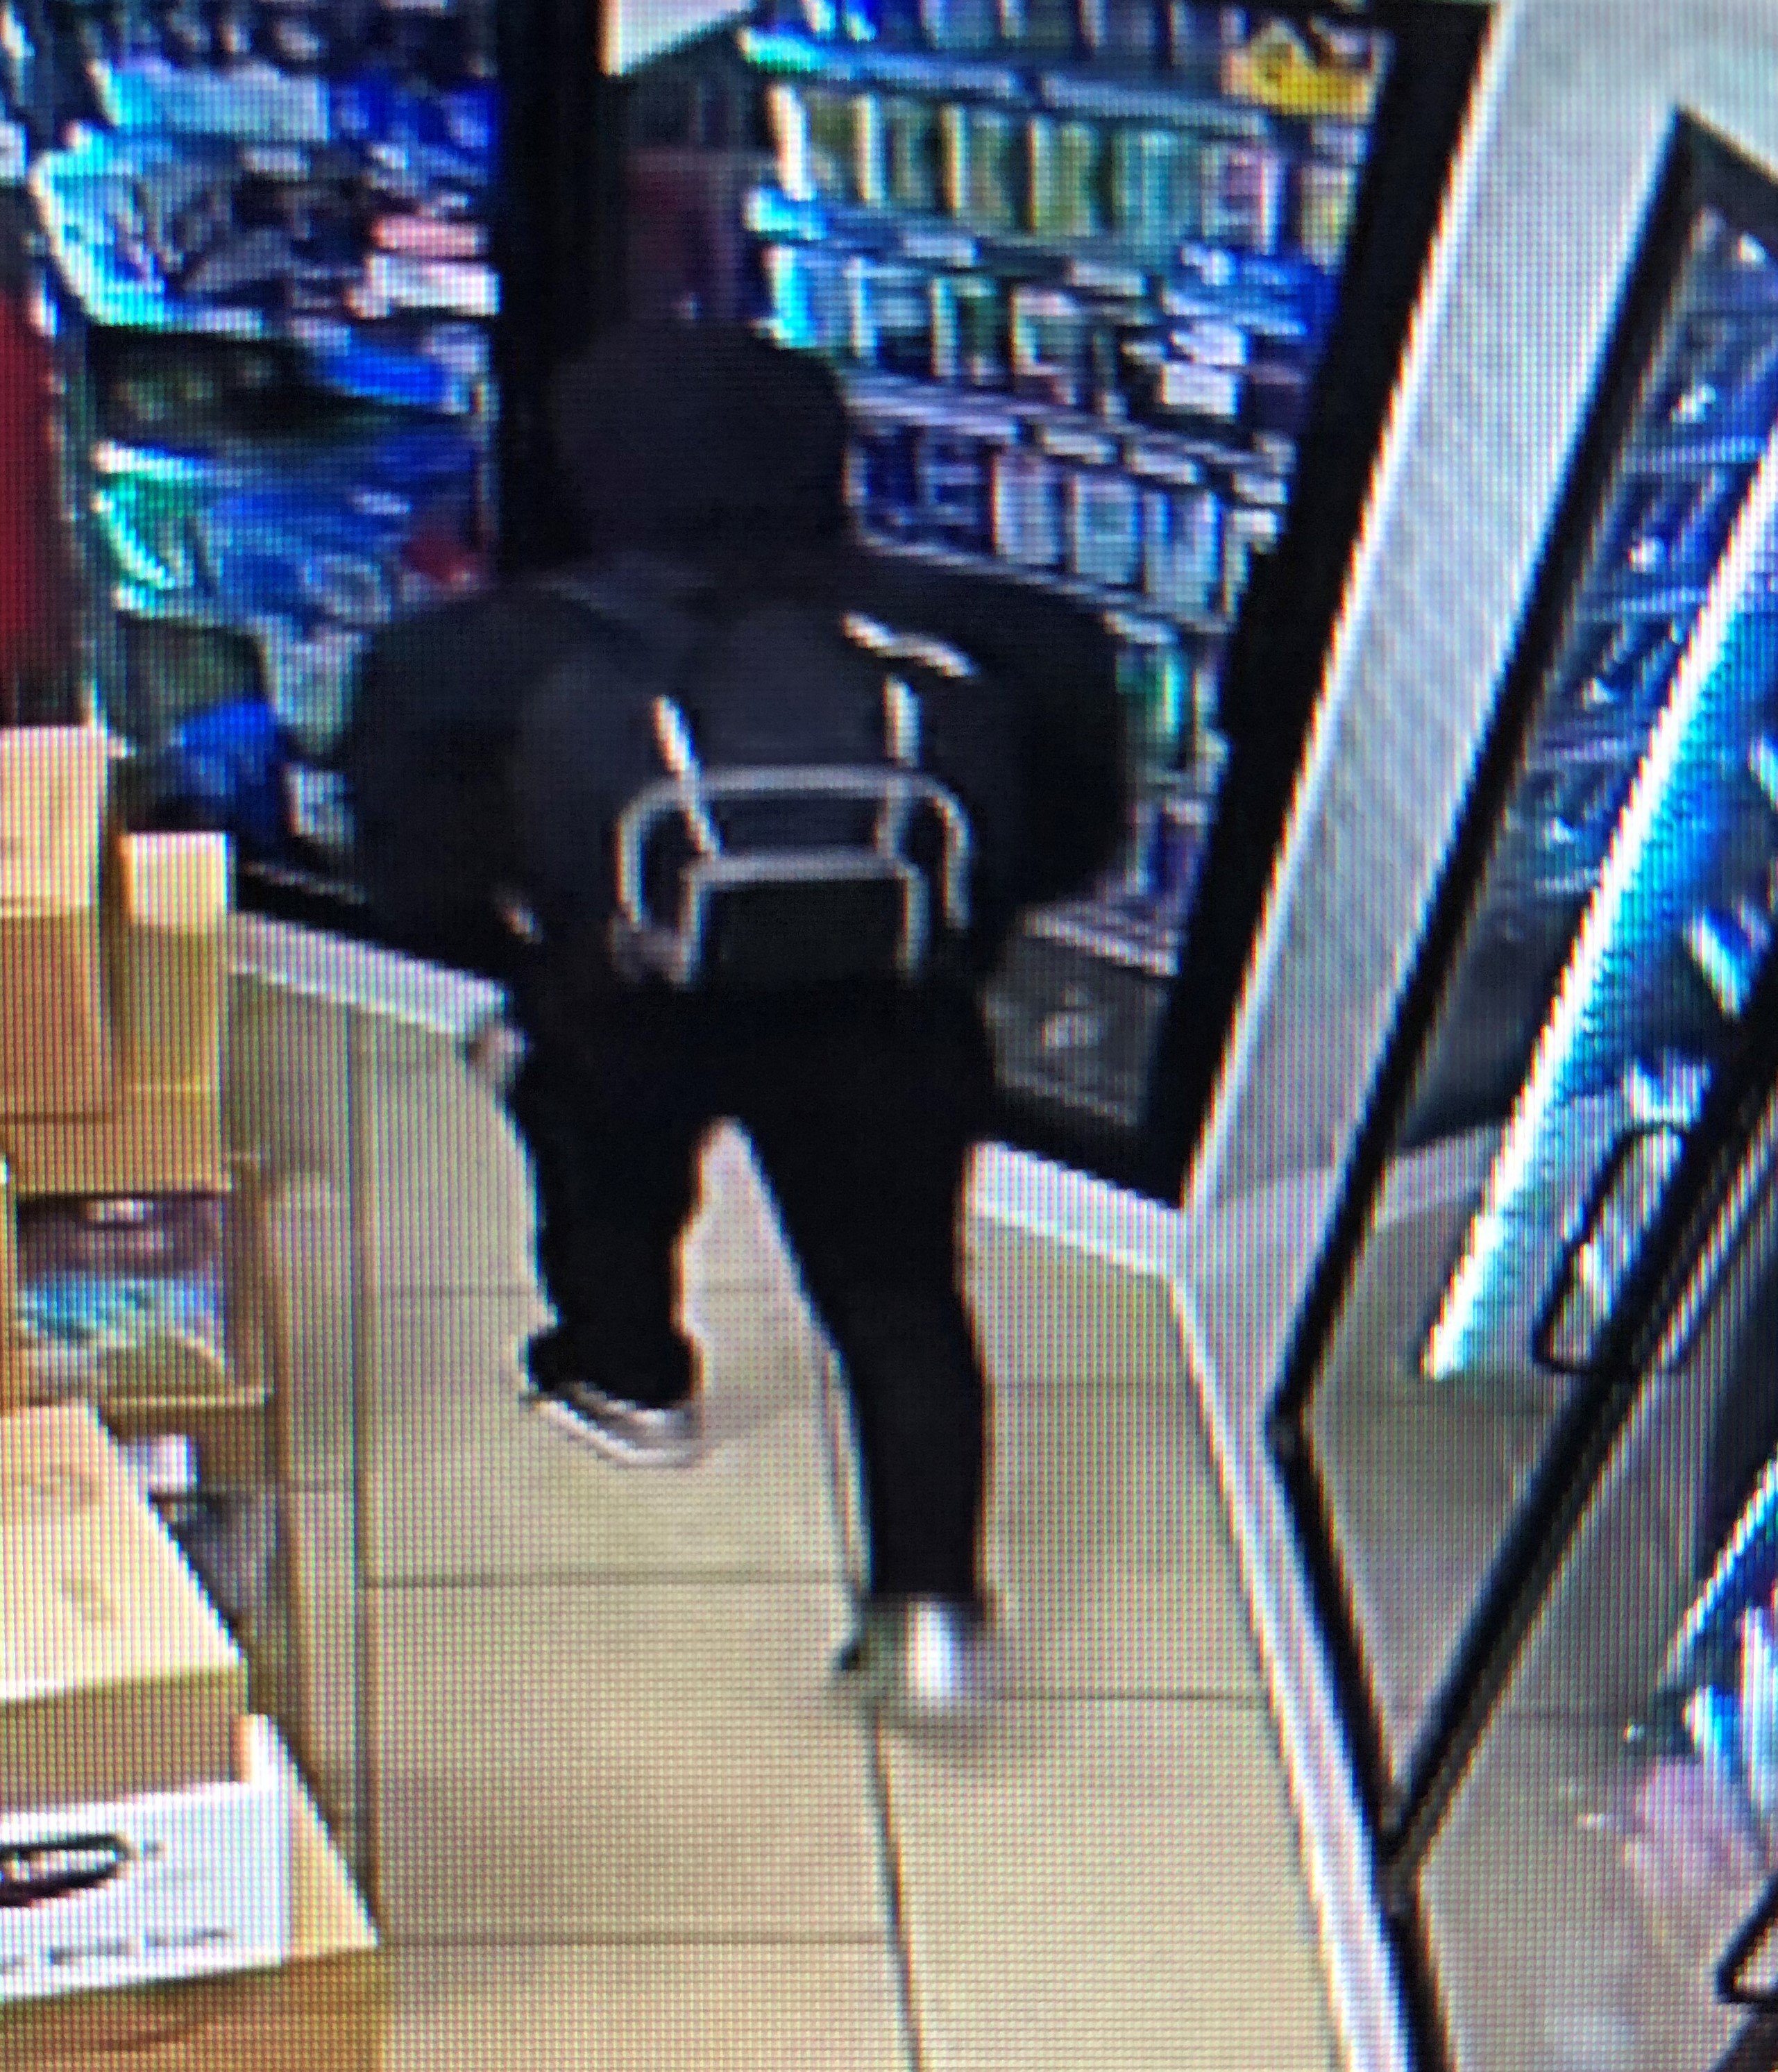 Image 3: Robbery Suspect